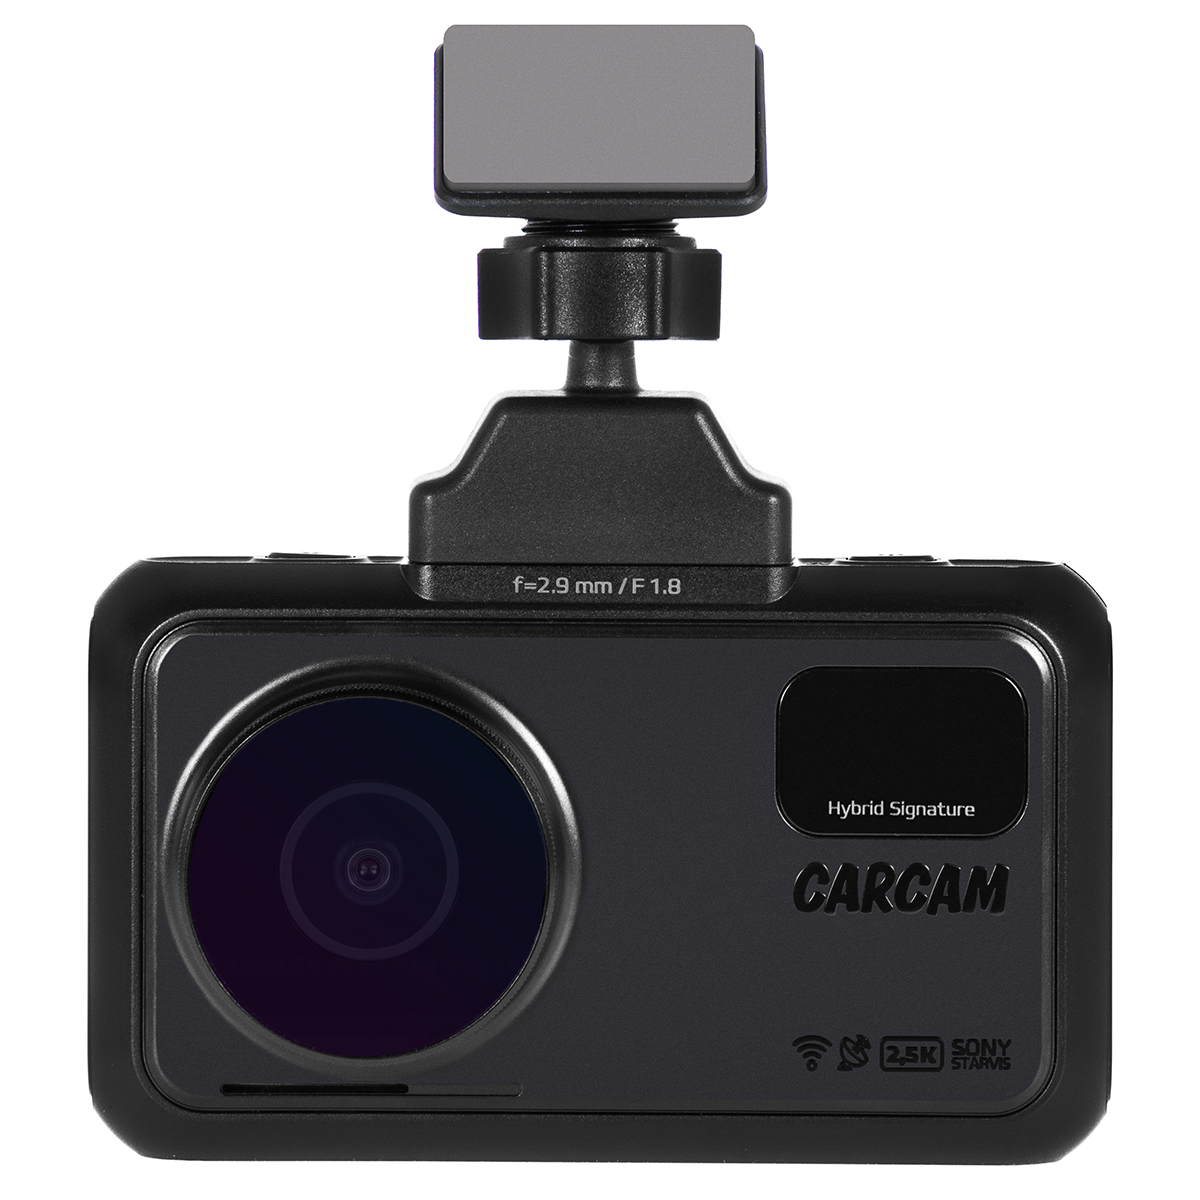 Carcam hybrid 2 signature цены. Carcam Hybrid 2 Signature. Carcam Hybrid 3s Signature. Видеорегистратор carcam Hybrid. Carcam Hybrid 2 Signature - видеорегистратор с радар-детектором.